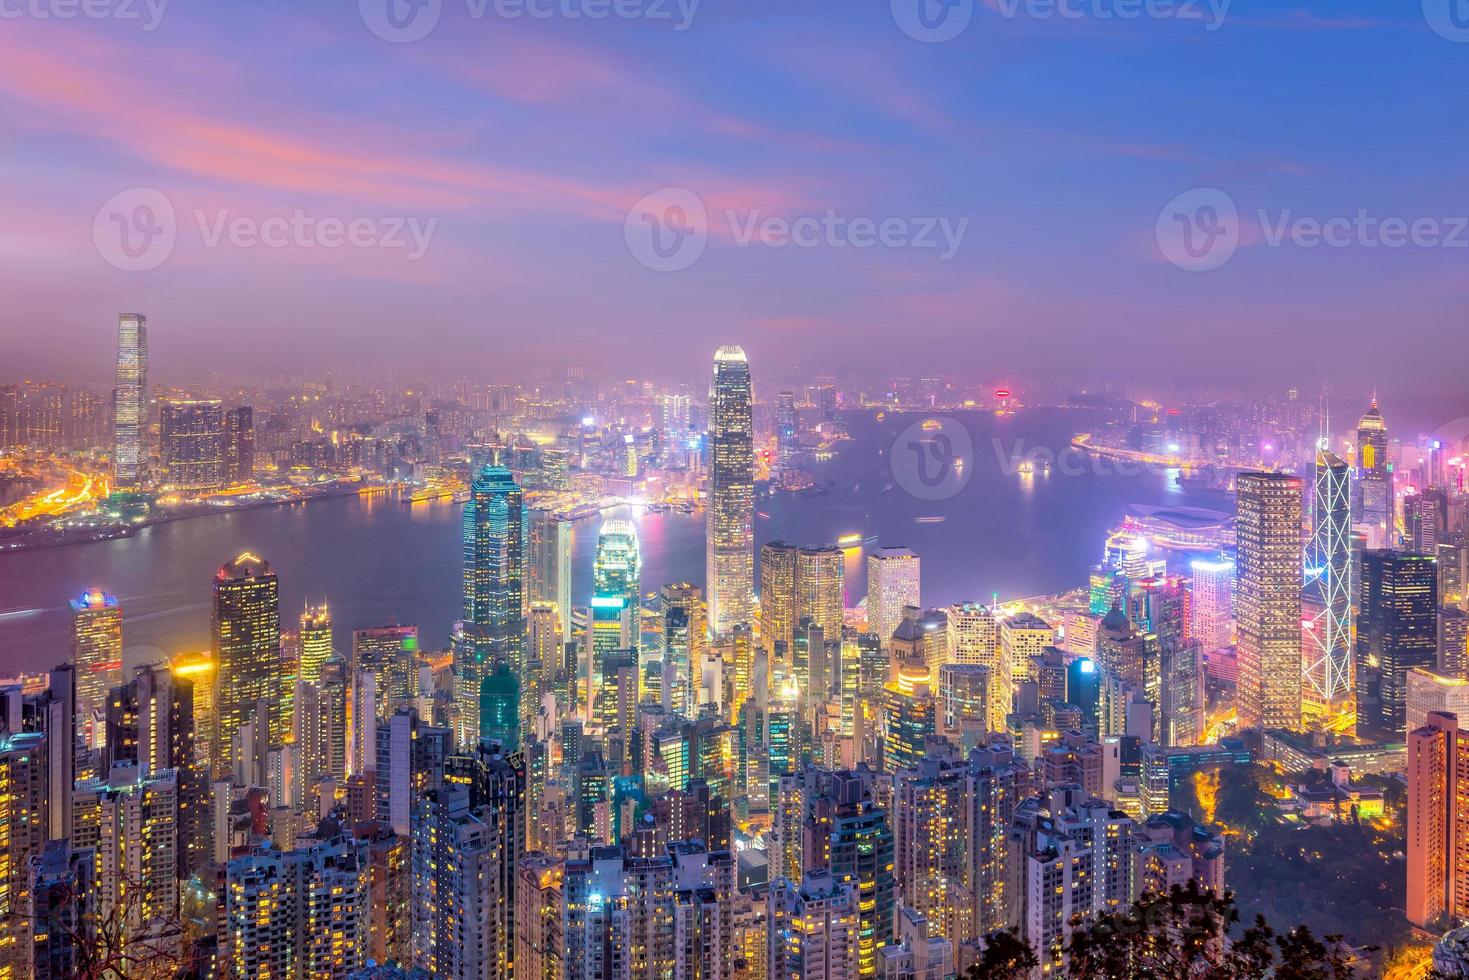 Hong Kong stadshorisont med Victoria Harbour View foto